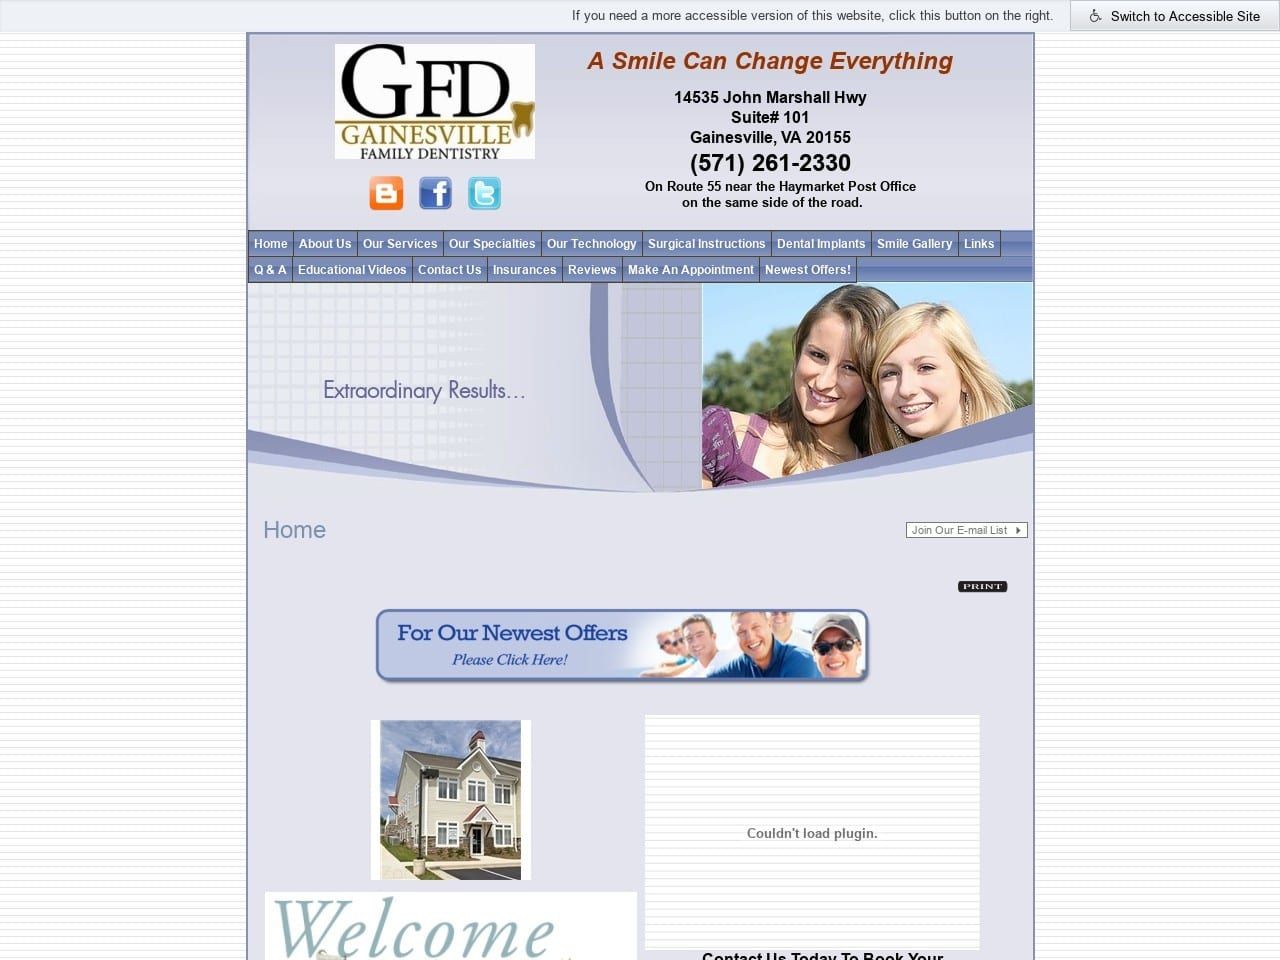 Gainesville Family Dentistry Website Screenshot from gvillefamilydentistry.com